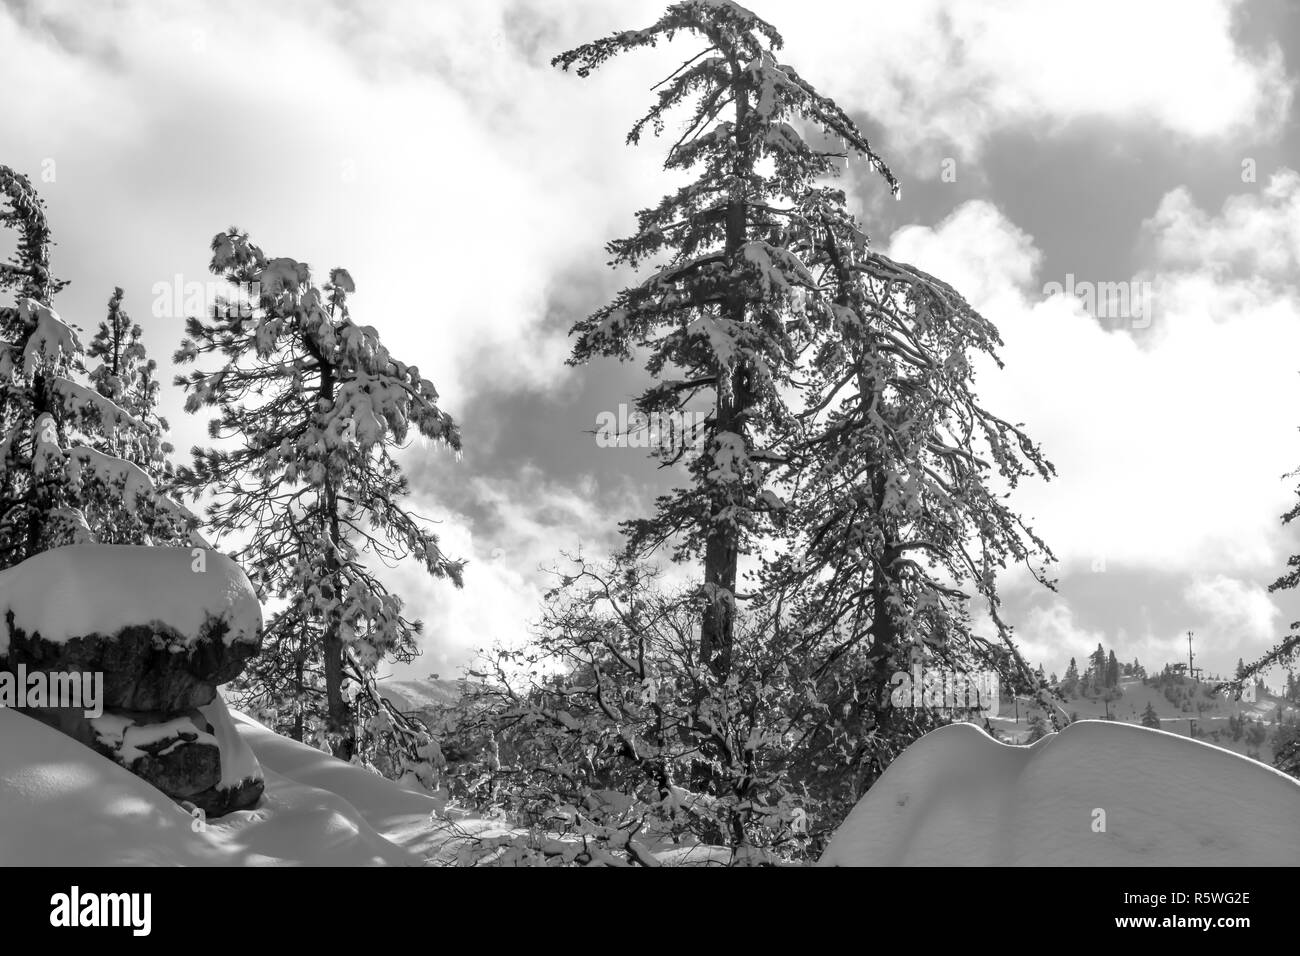 Desert Plants Under Snow, Climate Change at Southern California, Big Bear Mountain, San Bernardino, 2016 Stock Photo